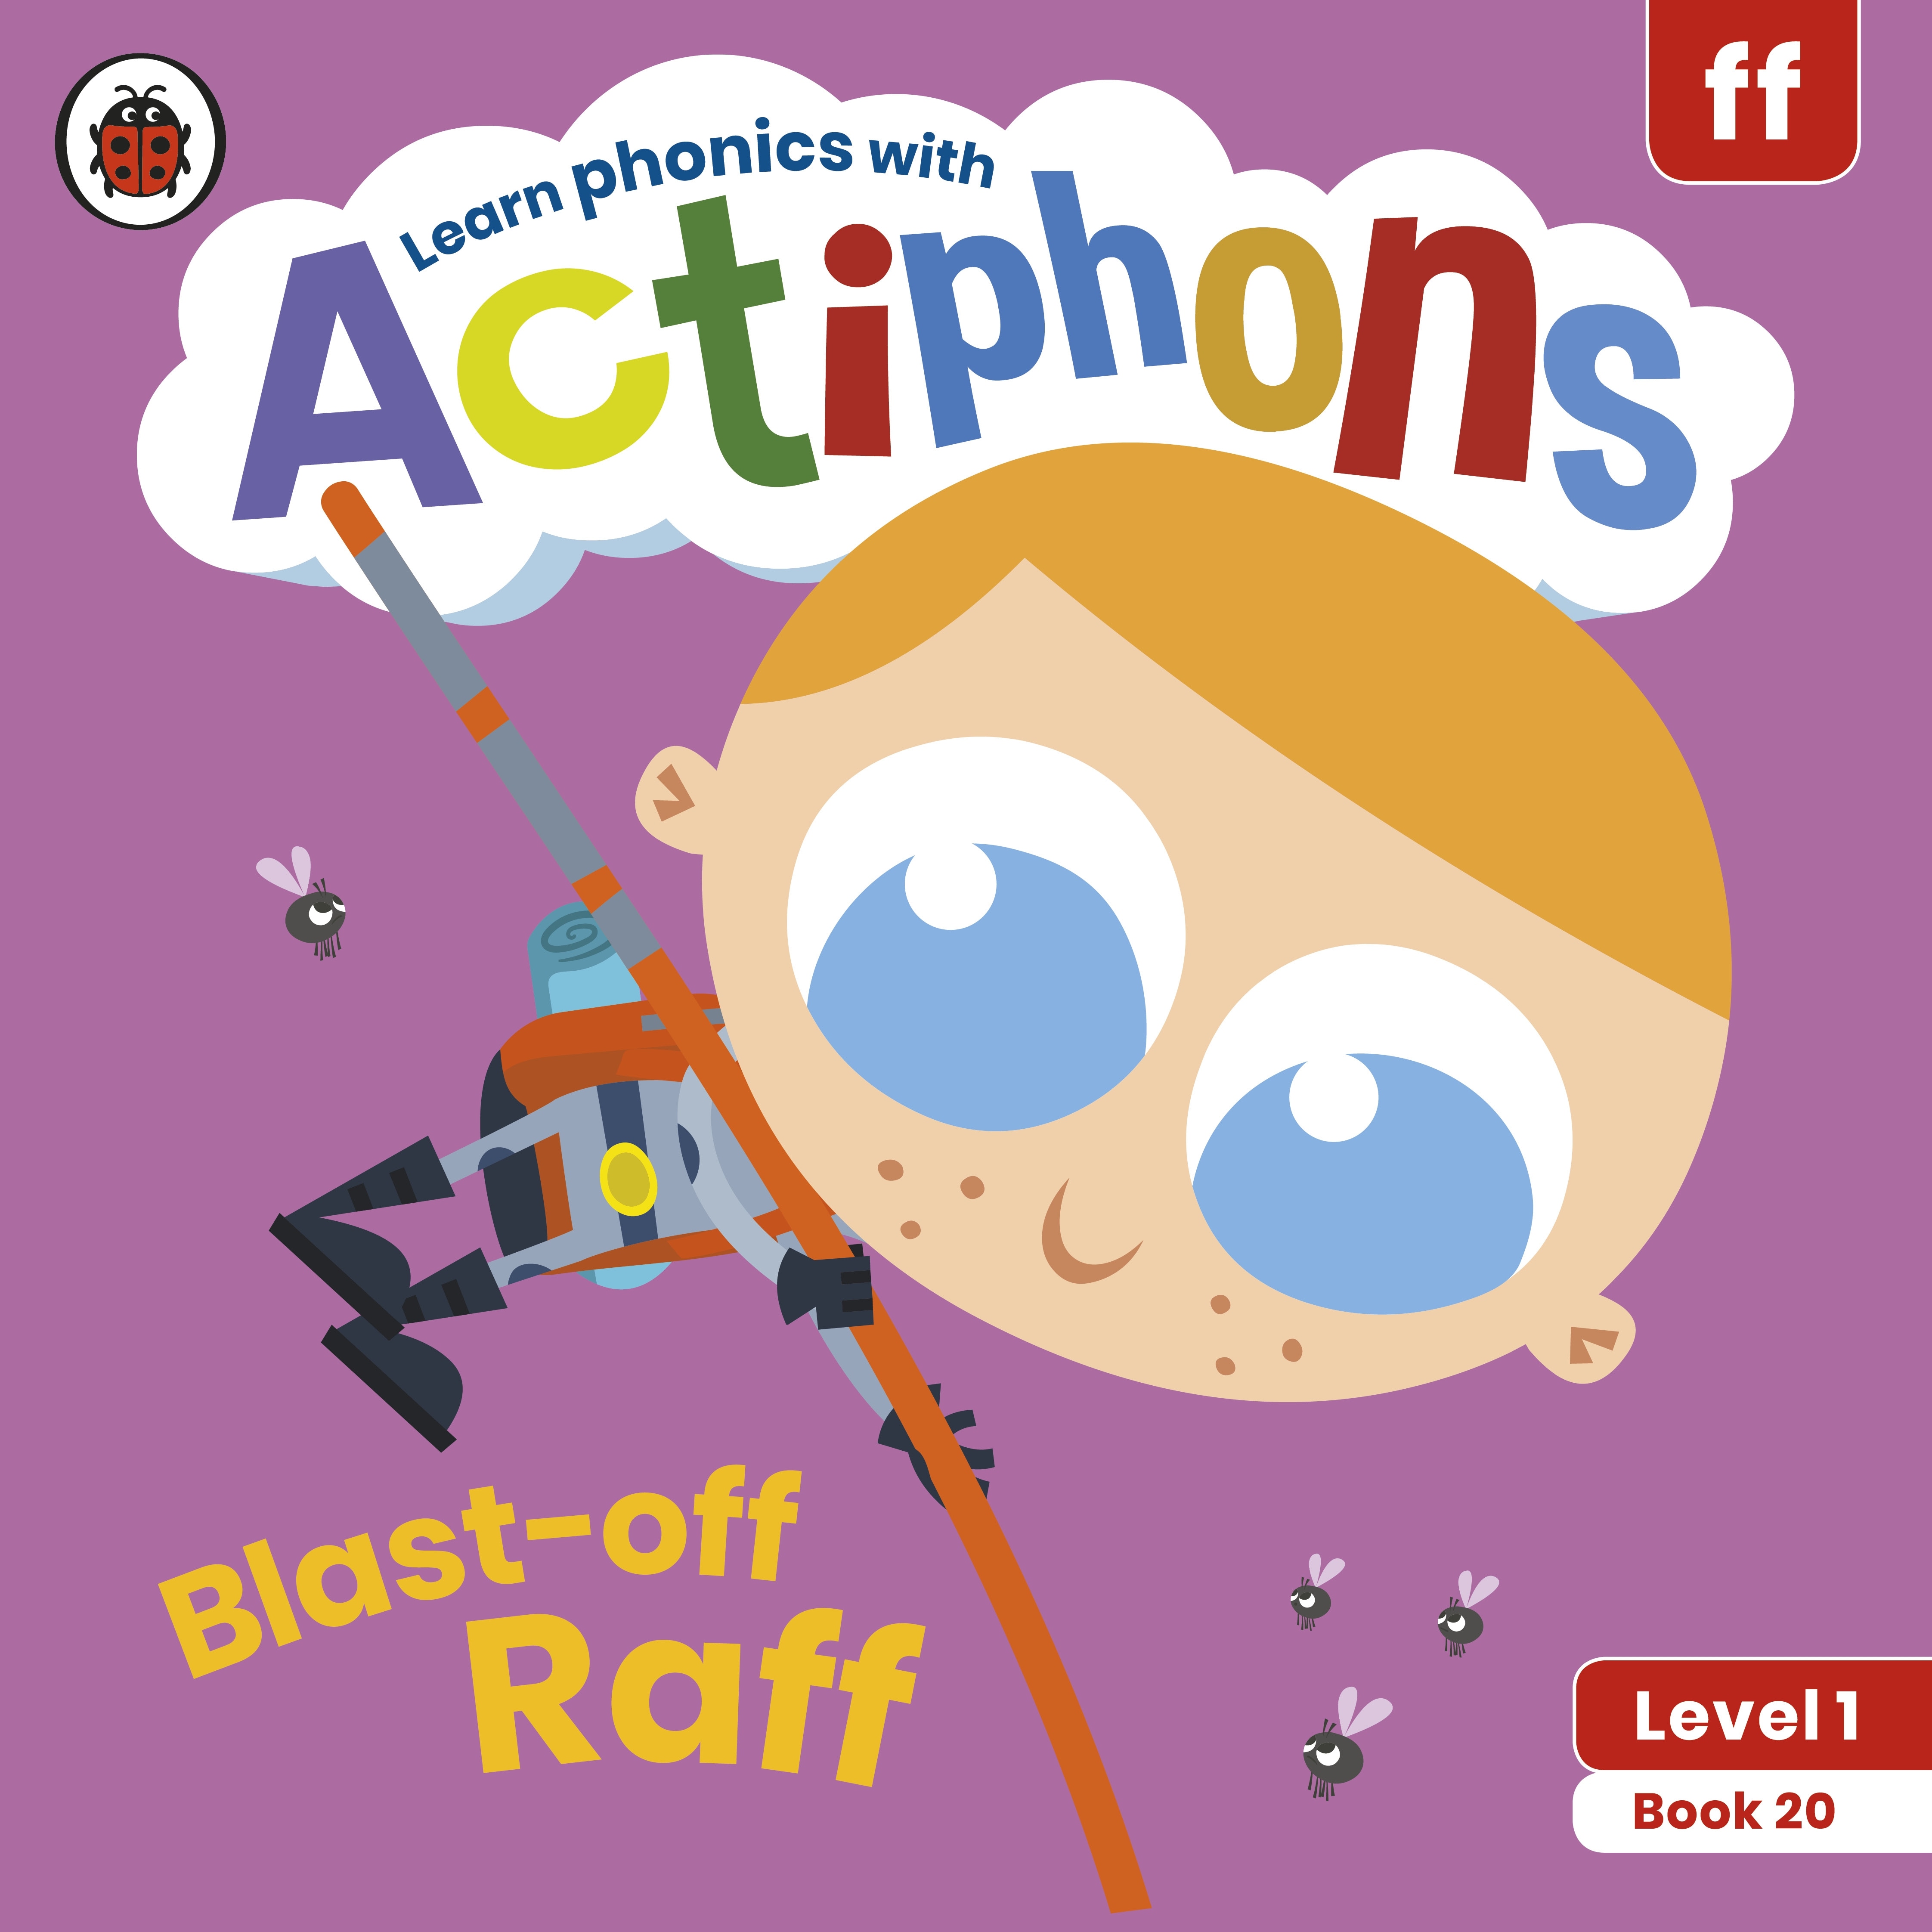 Actiphons Level 1 Book 20 Blast-off Raff